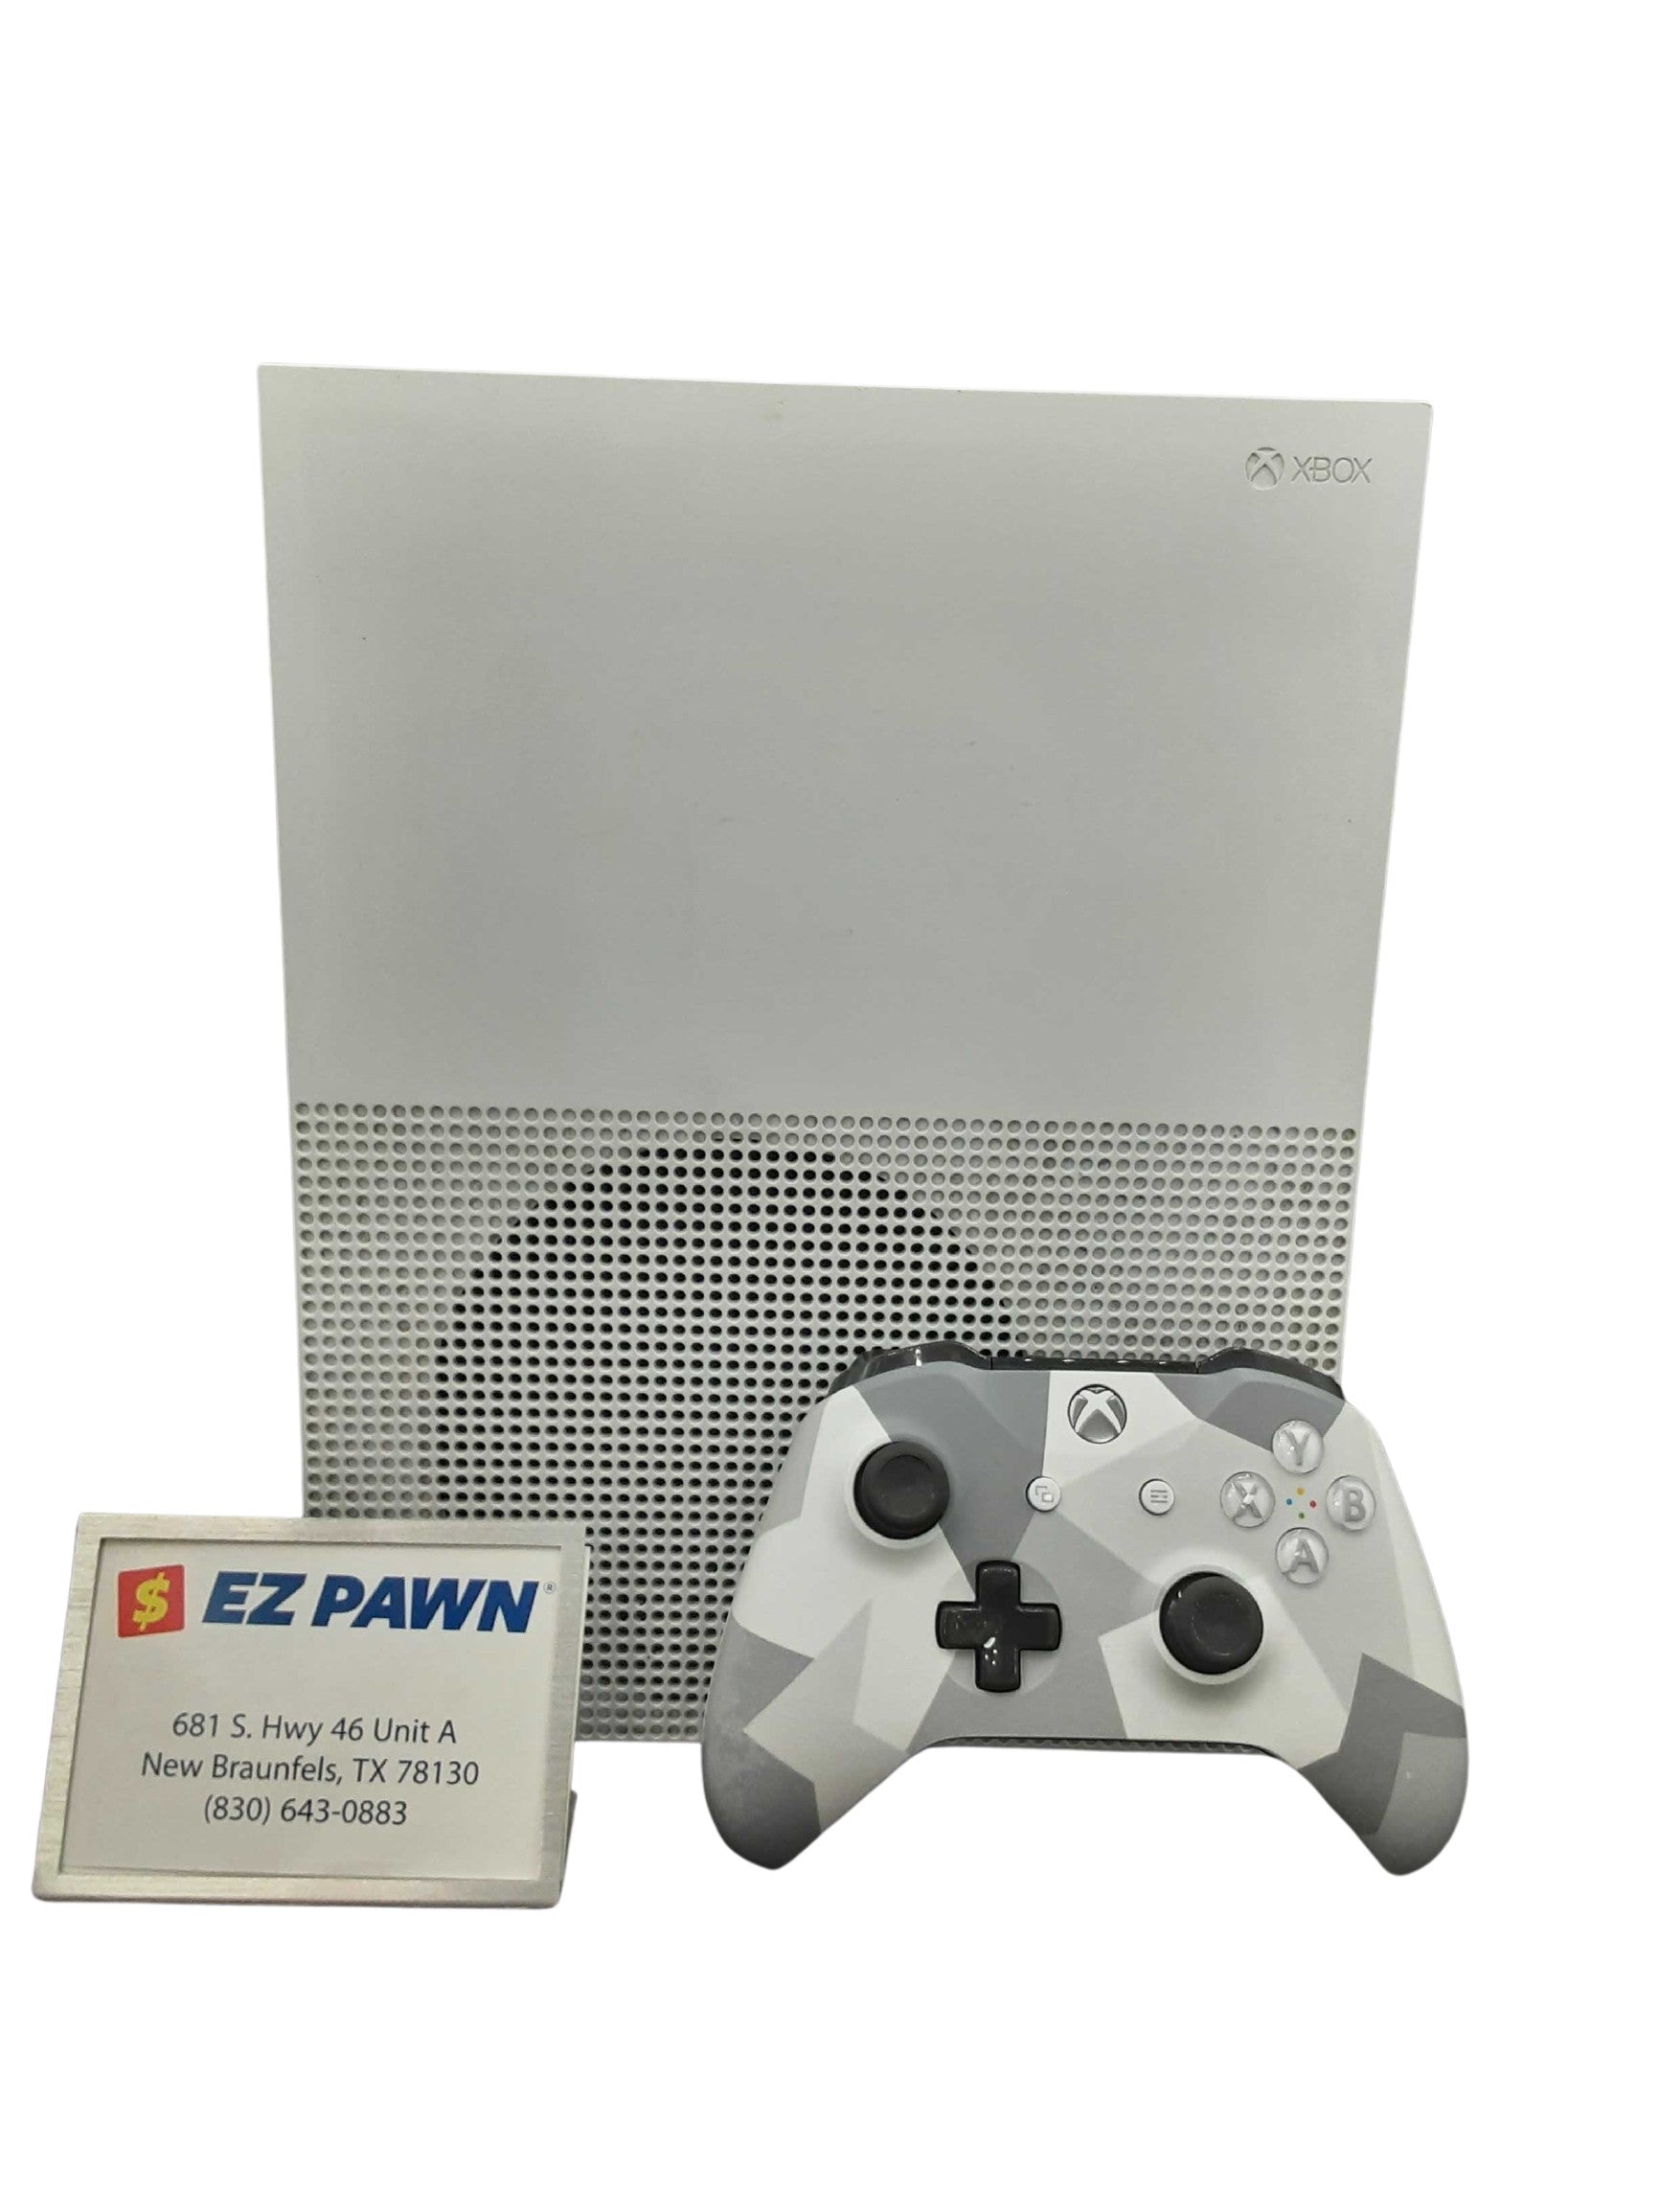 Microsoft Xbox One S (500gb) 500 Gb White Video Game Console 